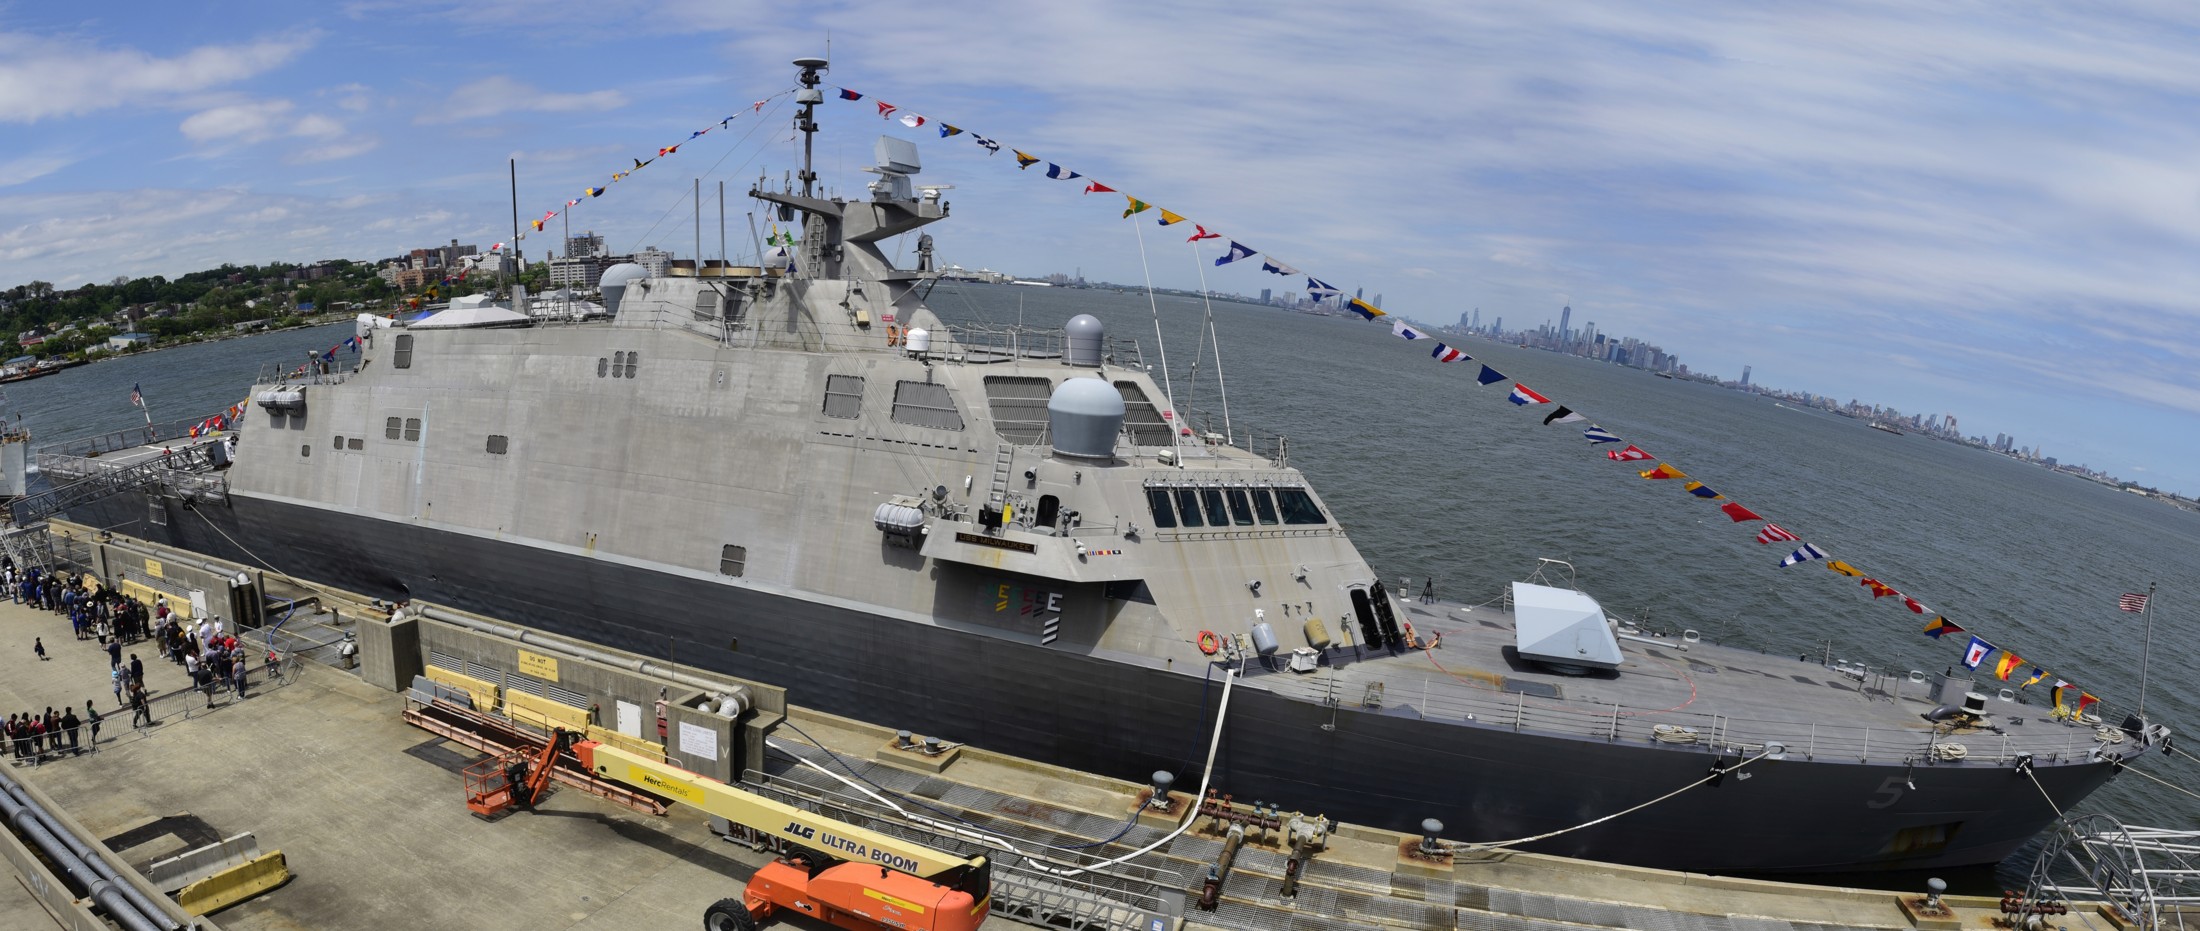 lcs-5 uss milwaukee freedom class littoral combat ship us navy 49 staten island new york